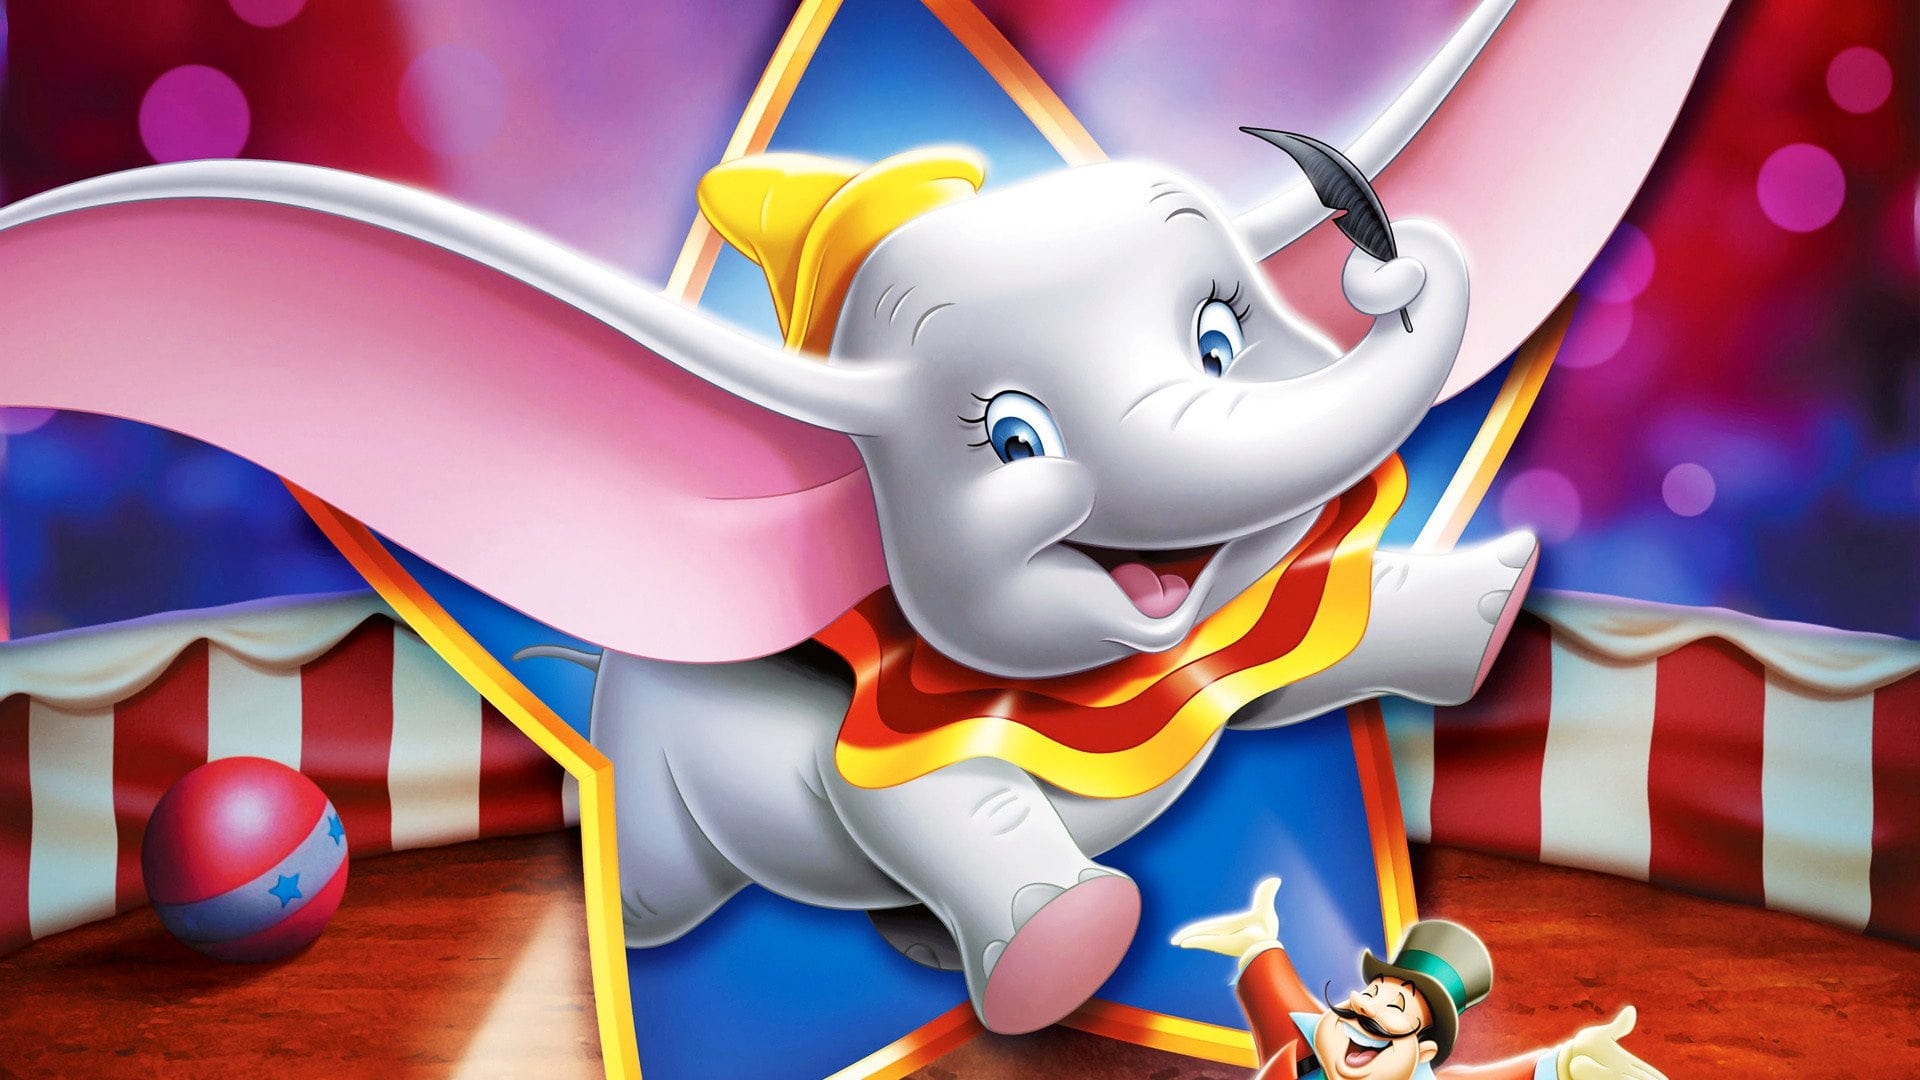 Image du film Dumbo, l'éléphant volant hsg3q21ydvbycjz1pwddkms8977jpg